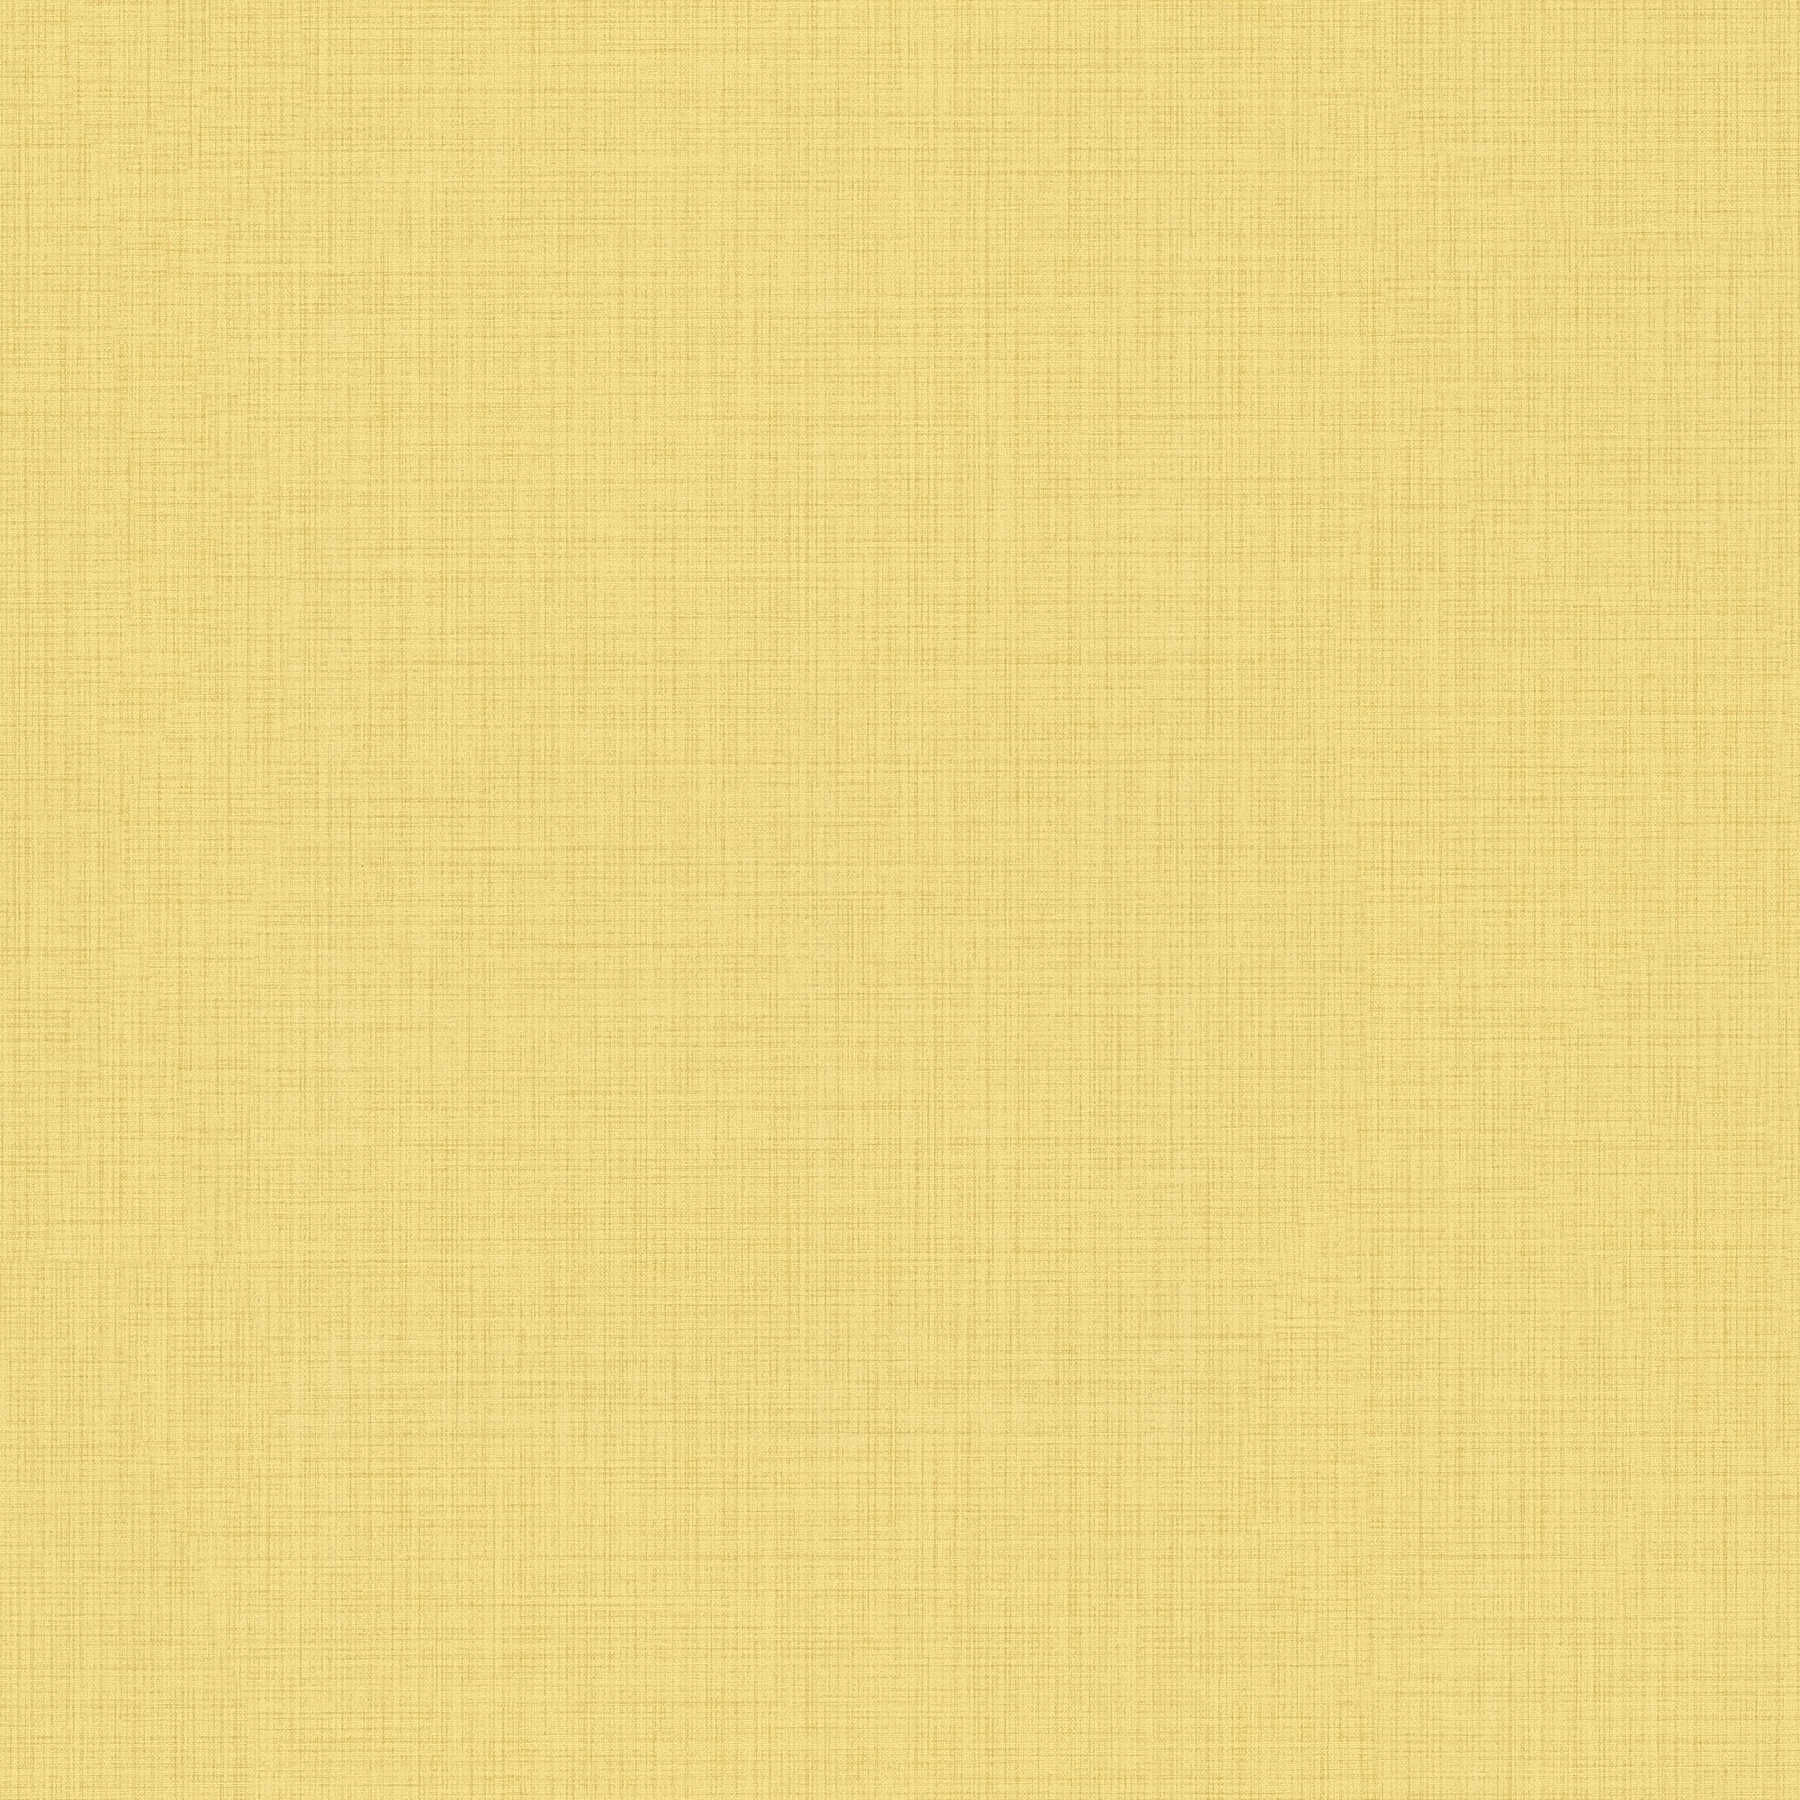 Yellow wallpaper plain with linen look hatching
